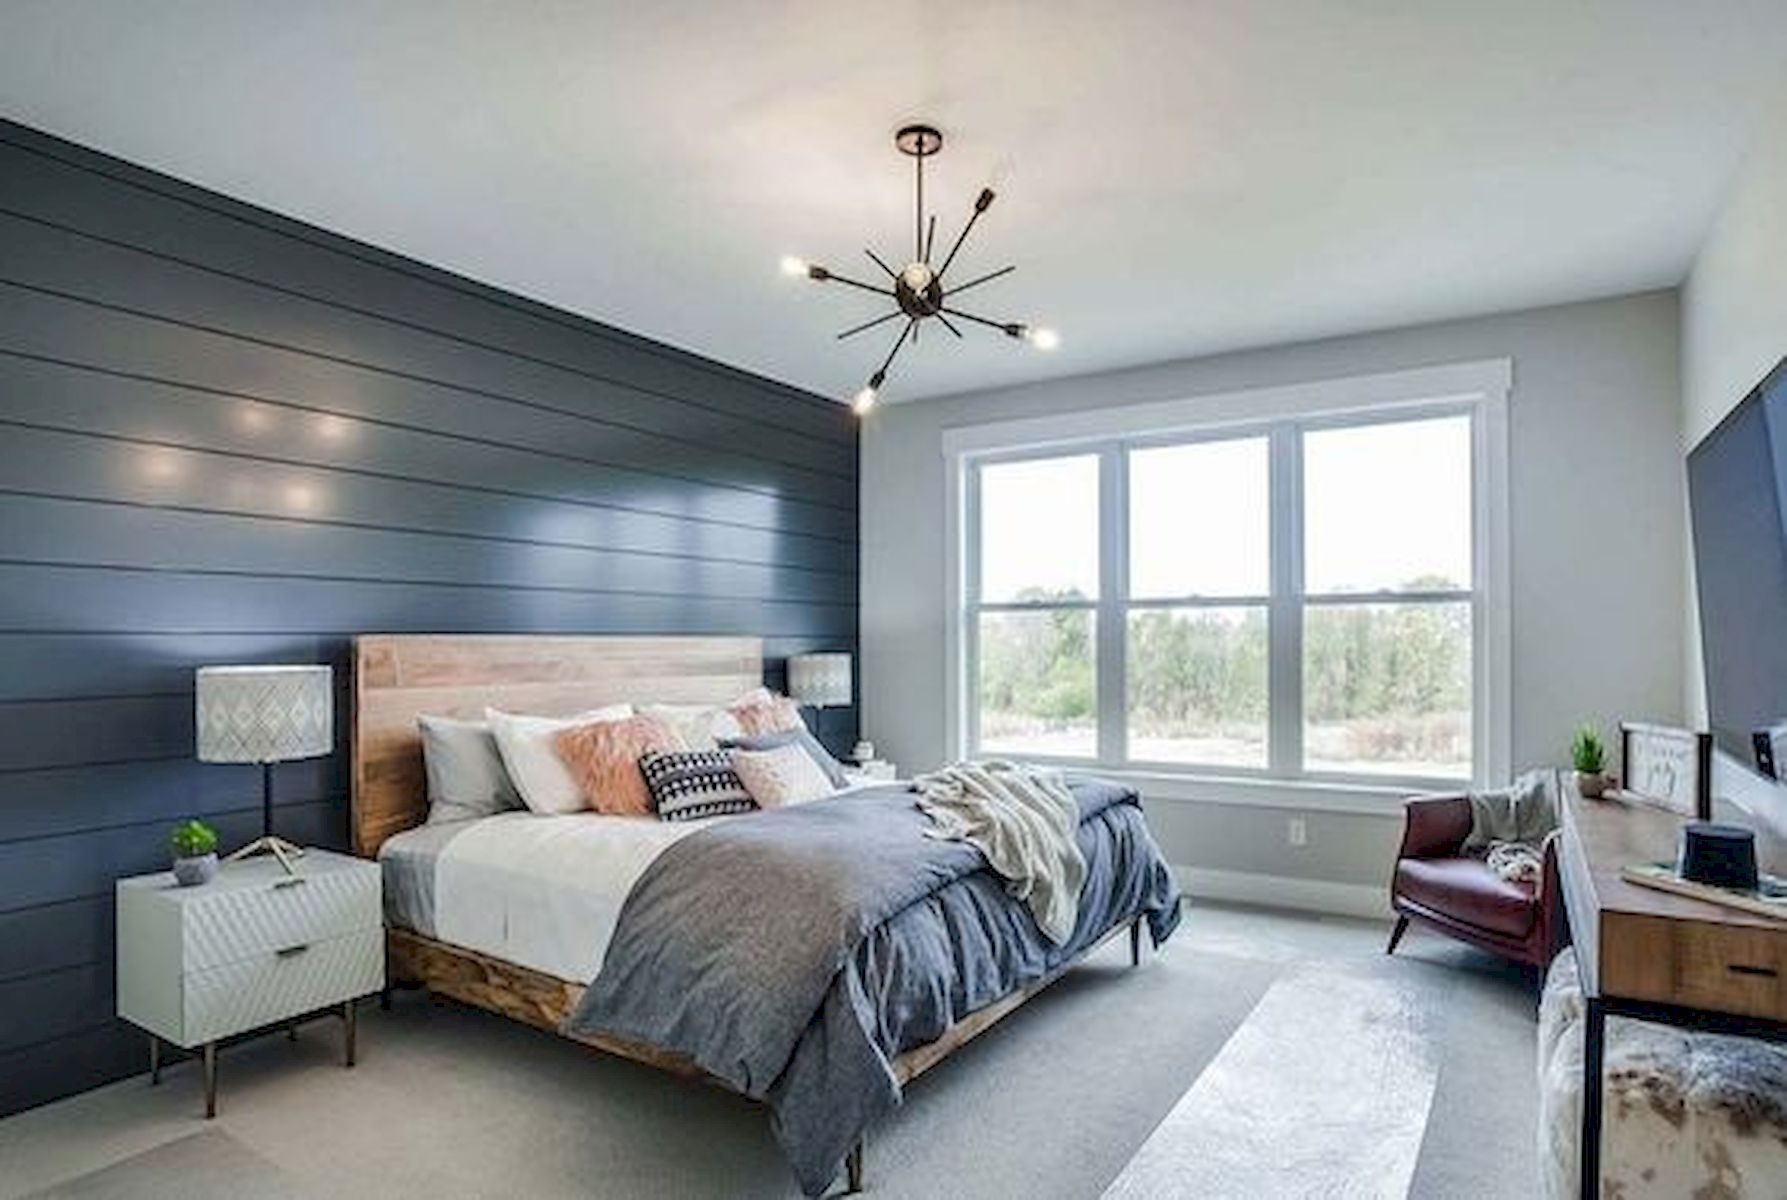 36 Beautiful Wall Bedroom Decor Ideas That Unique (25)